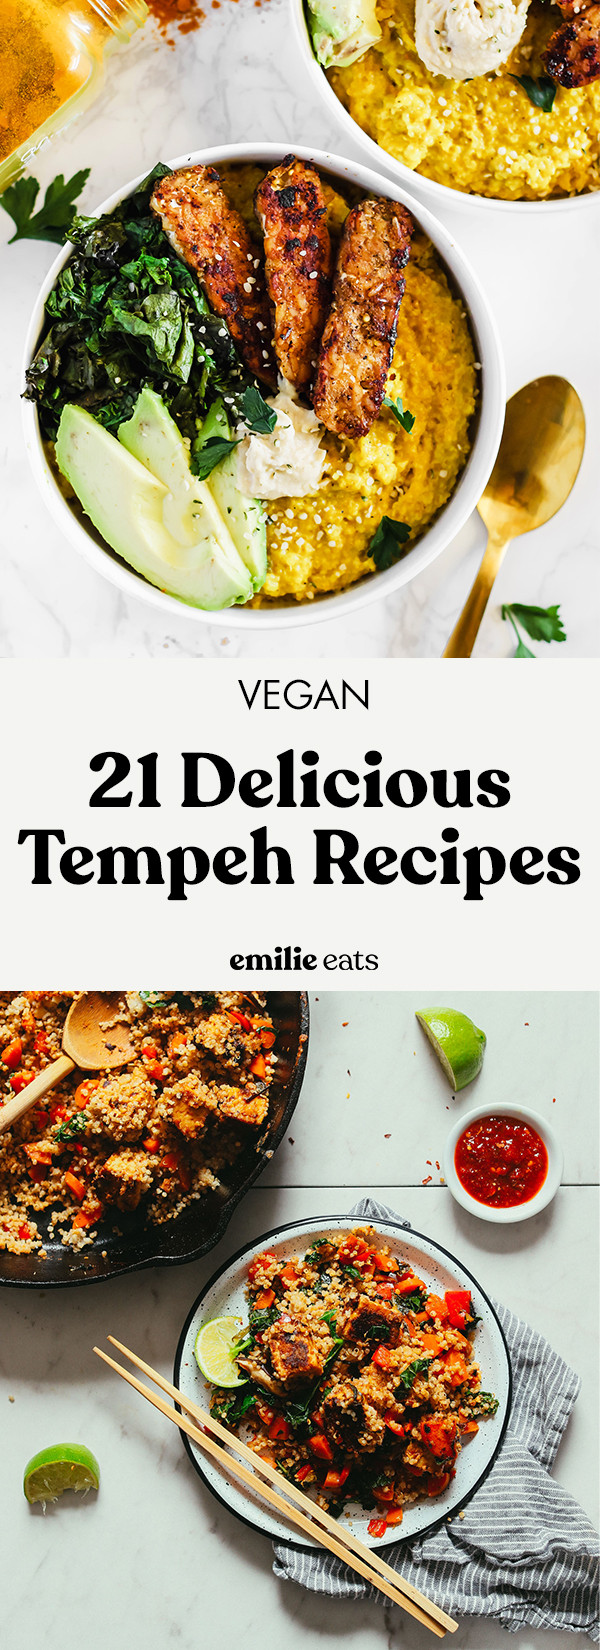 Tempeh Dinner Recipes
 21 Delicious Vegan Tempeh Recipes